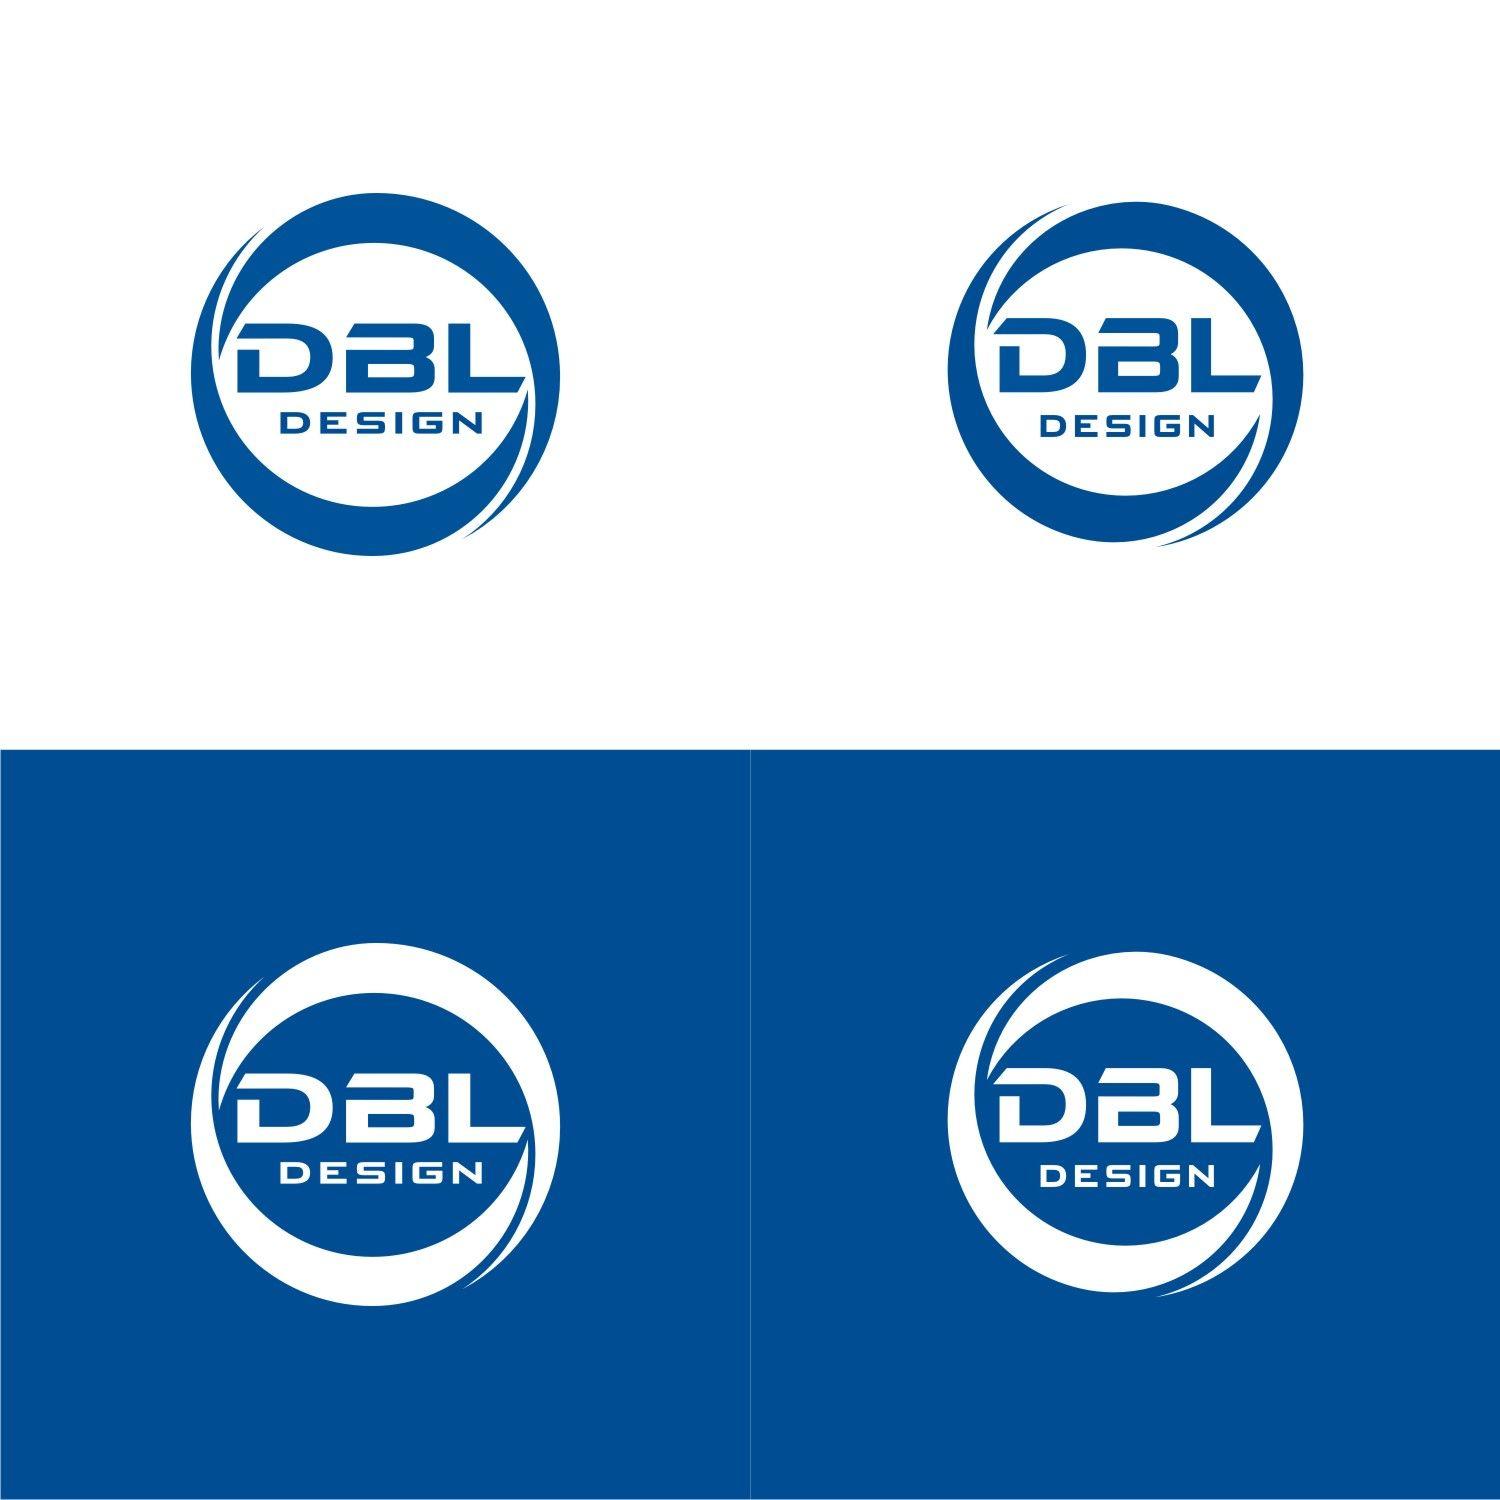 Dbl Logo - Masculine, Serious, Automotive Logo Design for DBL Design